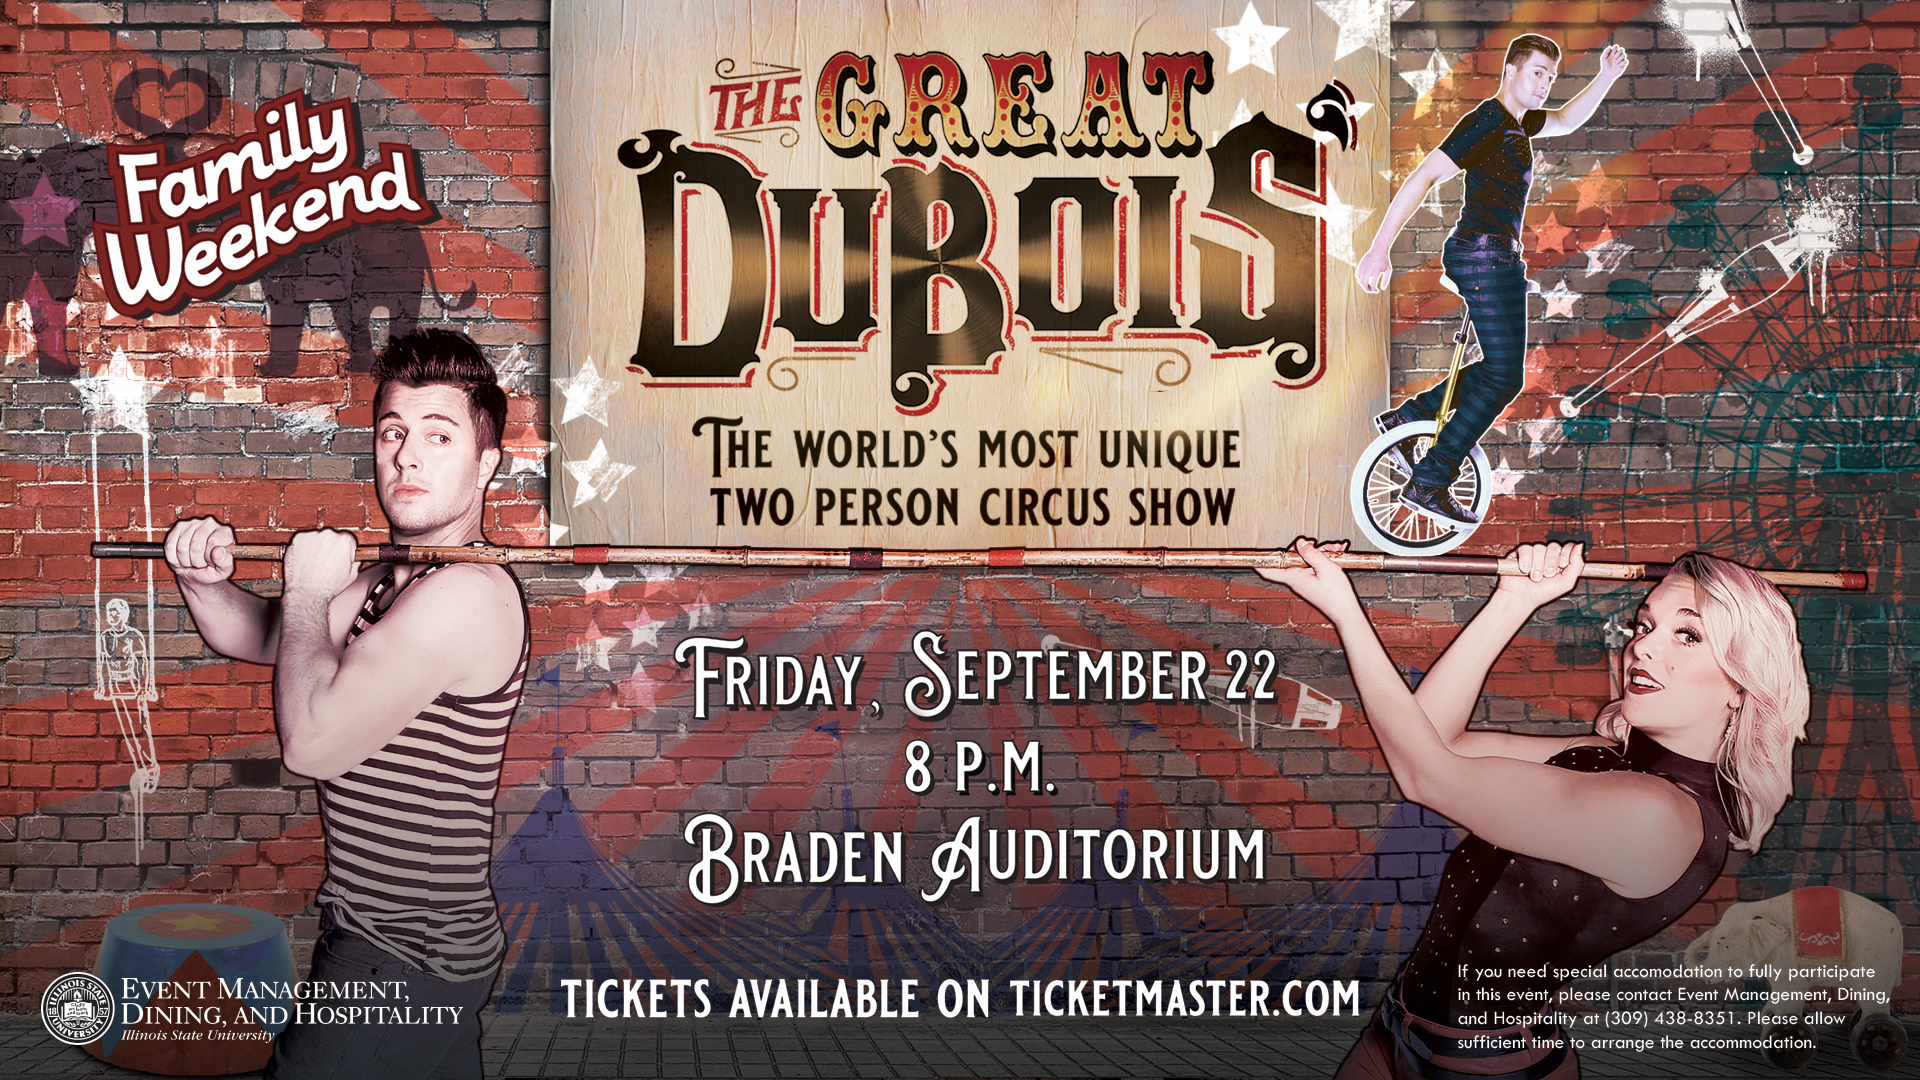 The Great DuBois at ISU: Circus Act